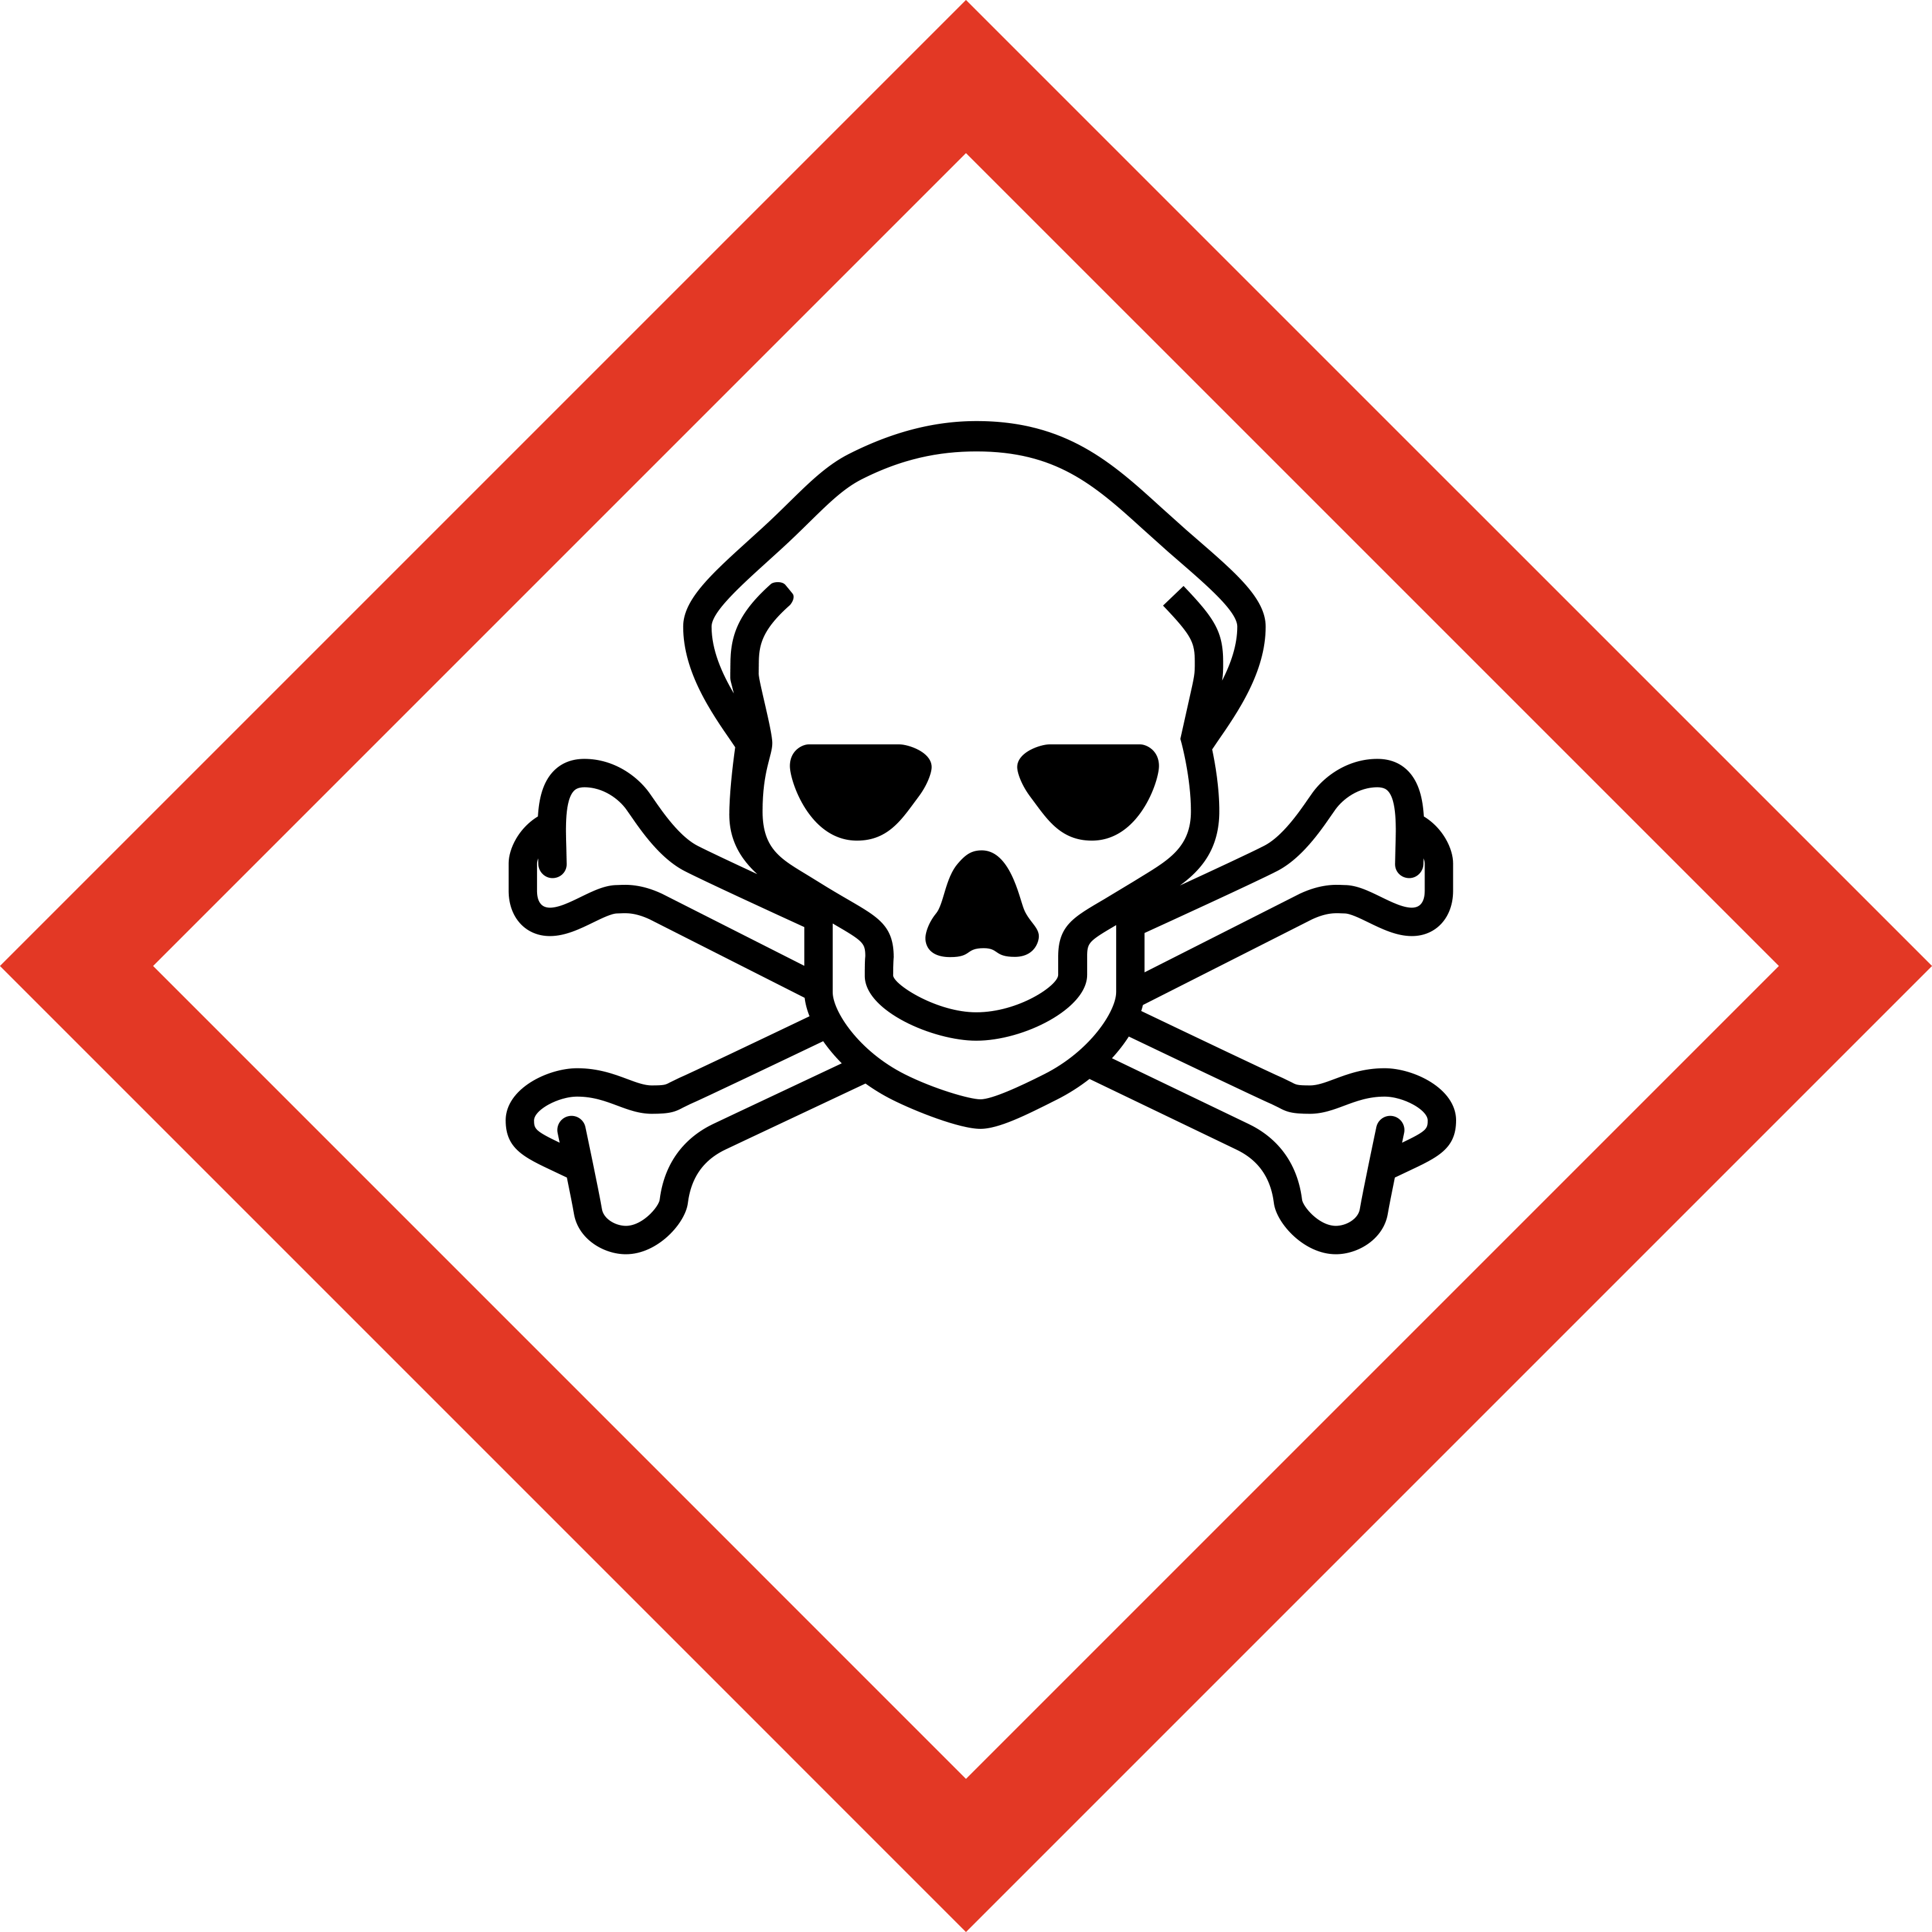 Danger pictogram, Toxic substance